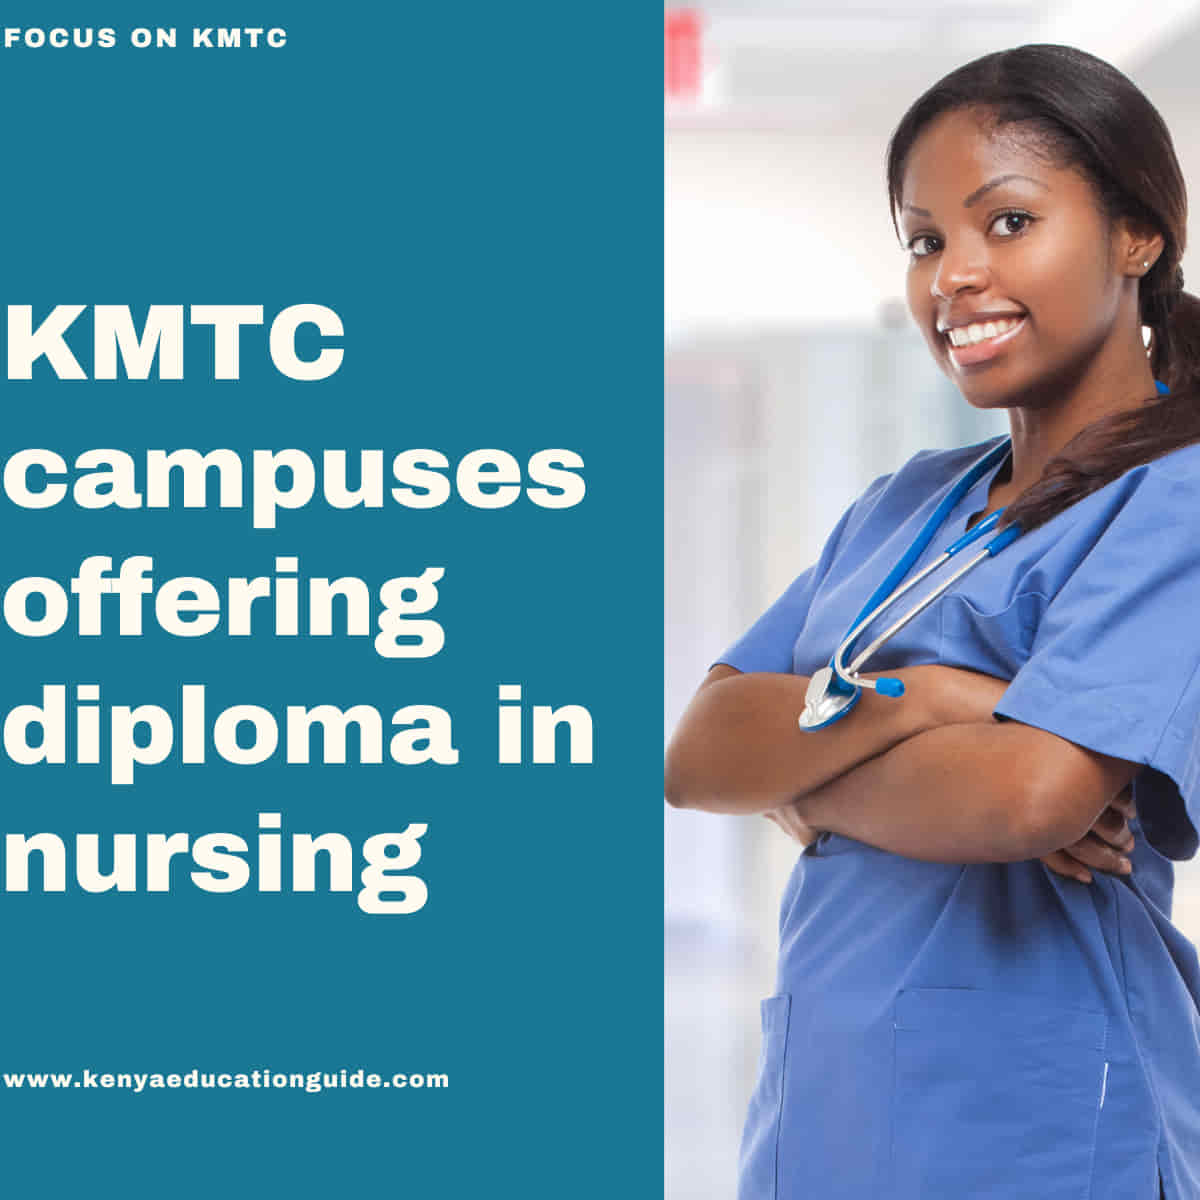 KMTC campuses offering diploma in nursing